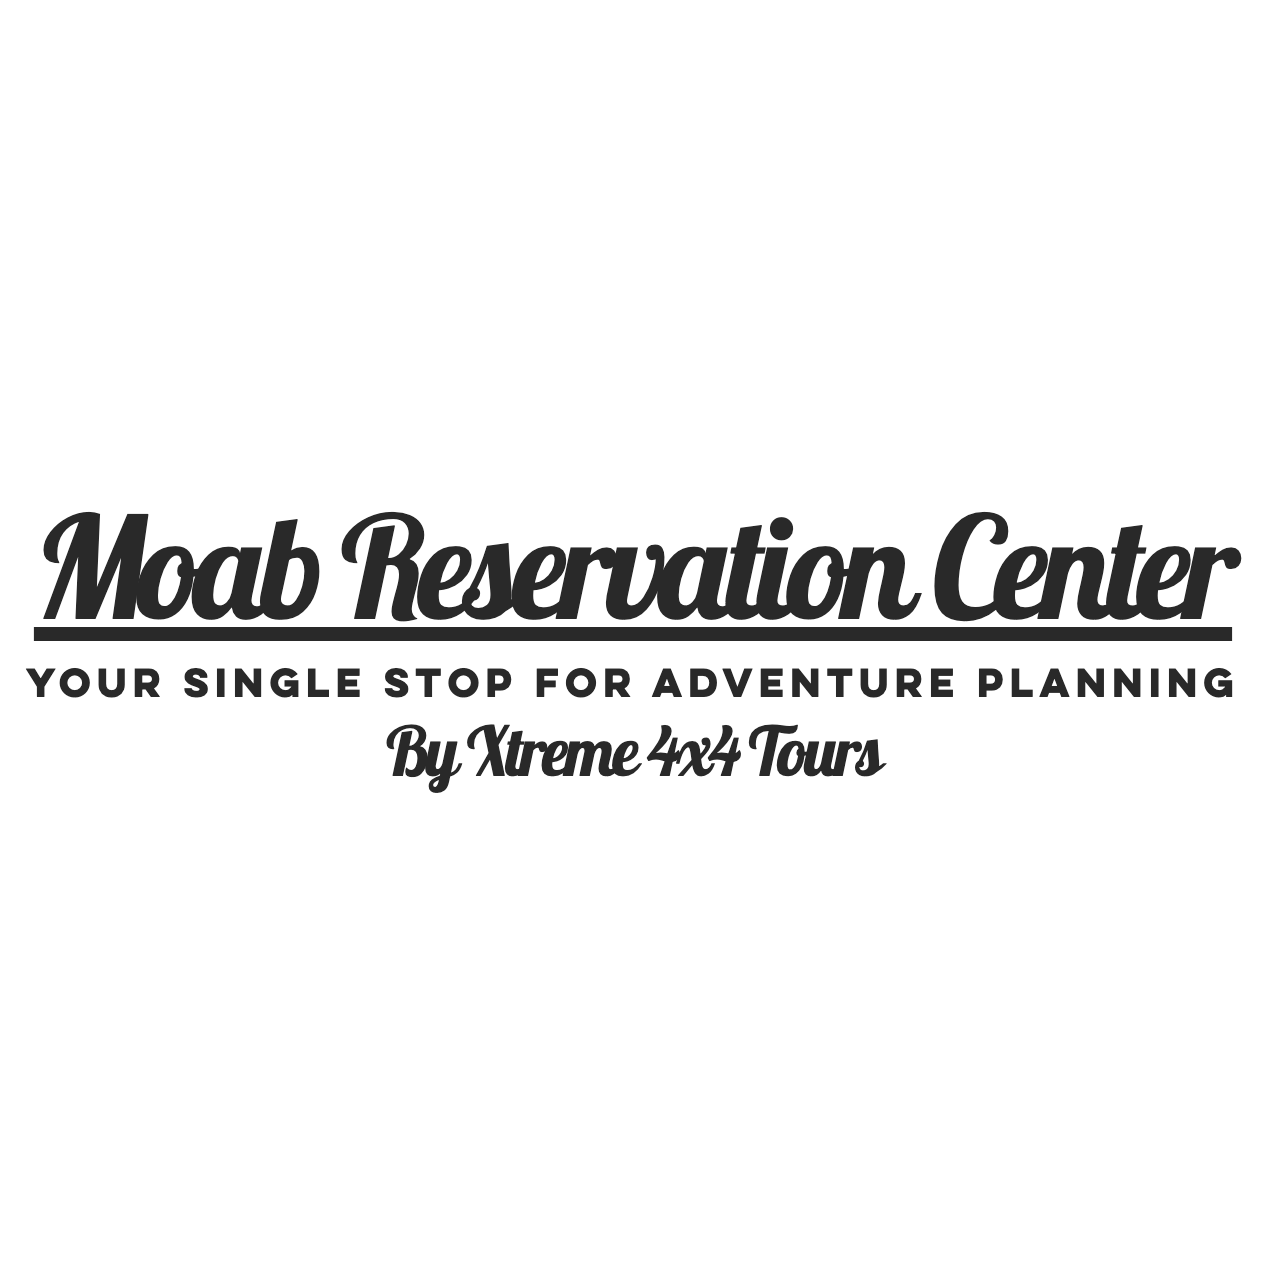 Moab Reservation Center